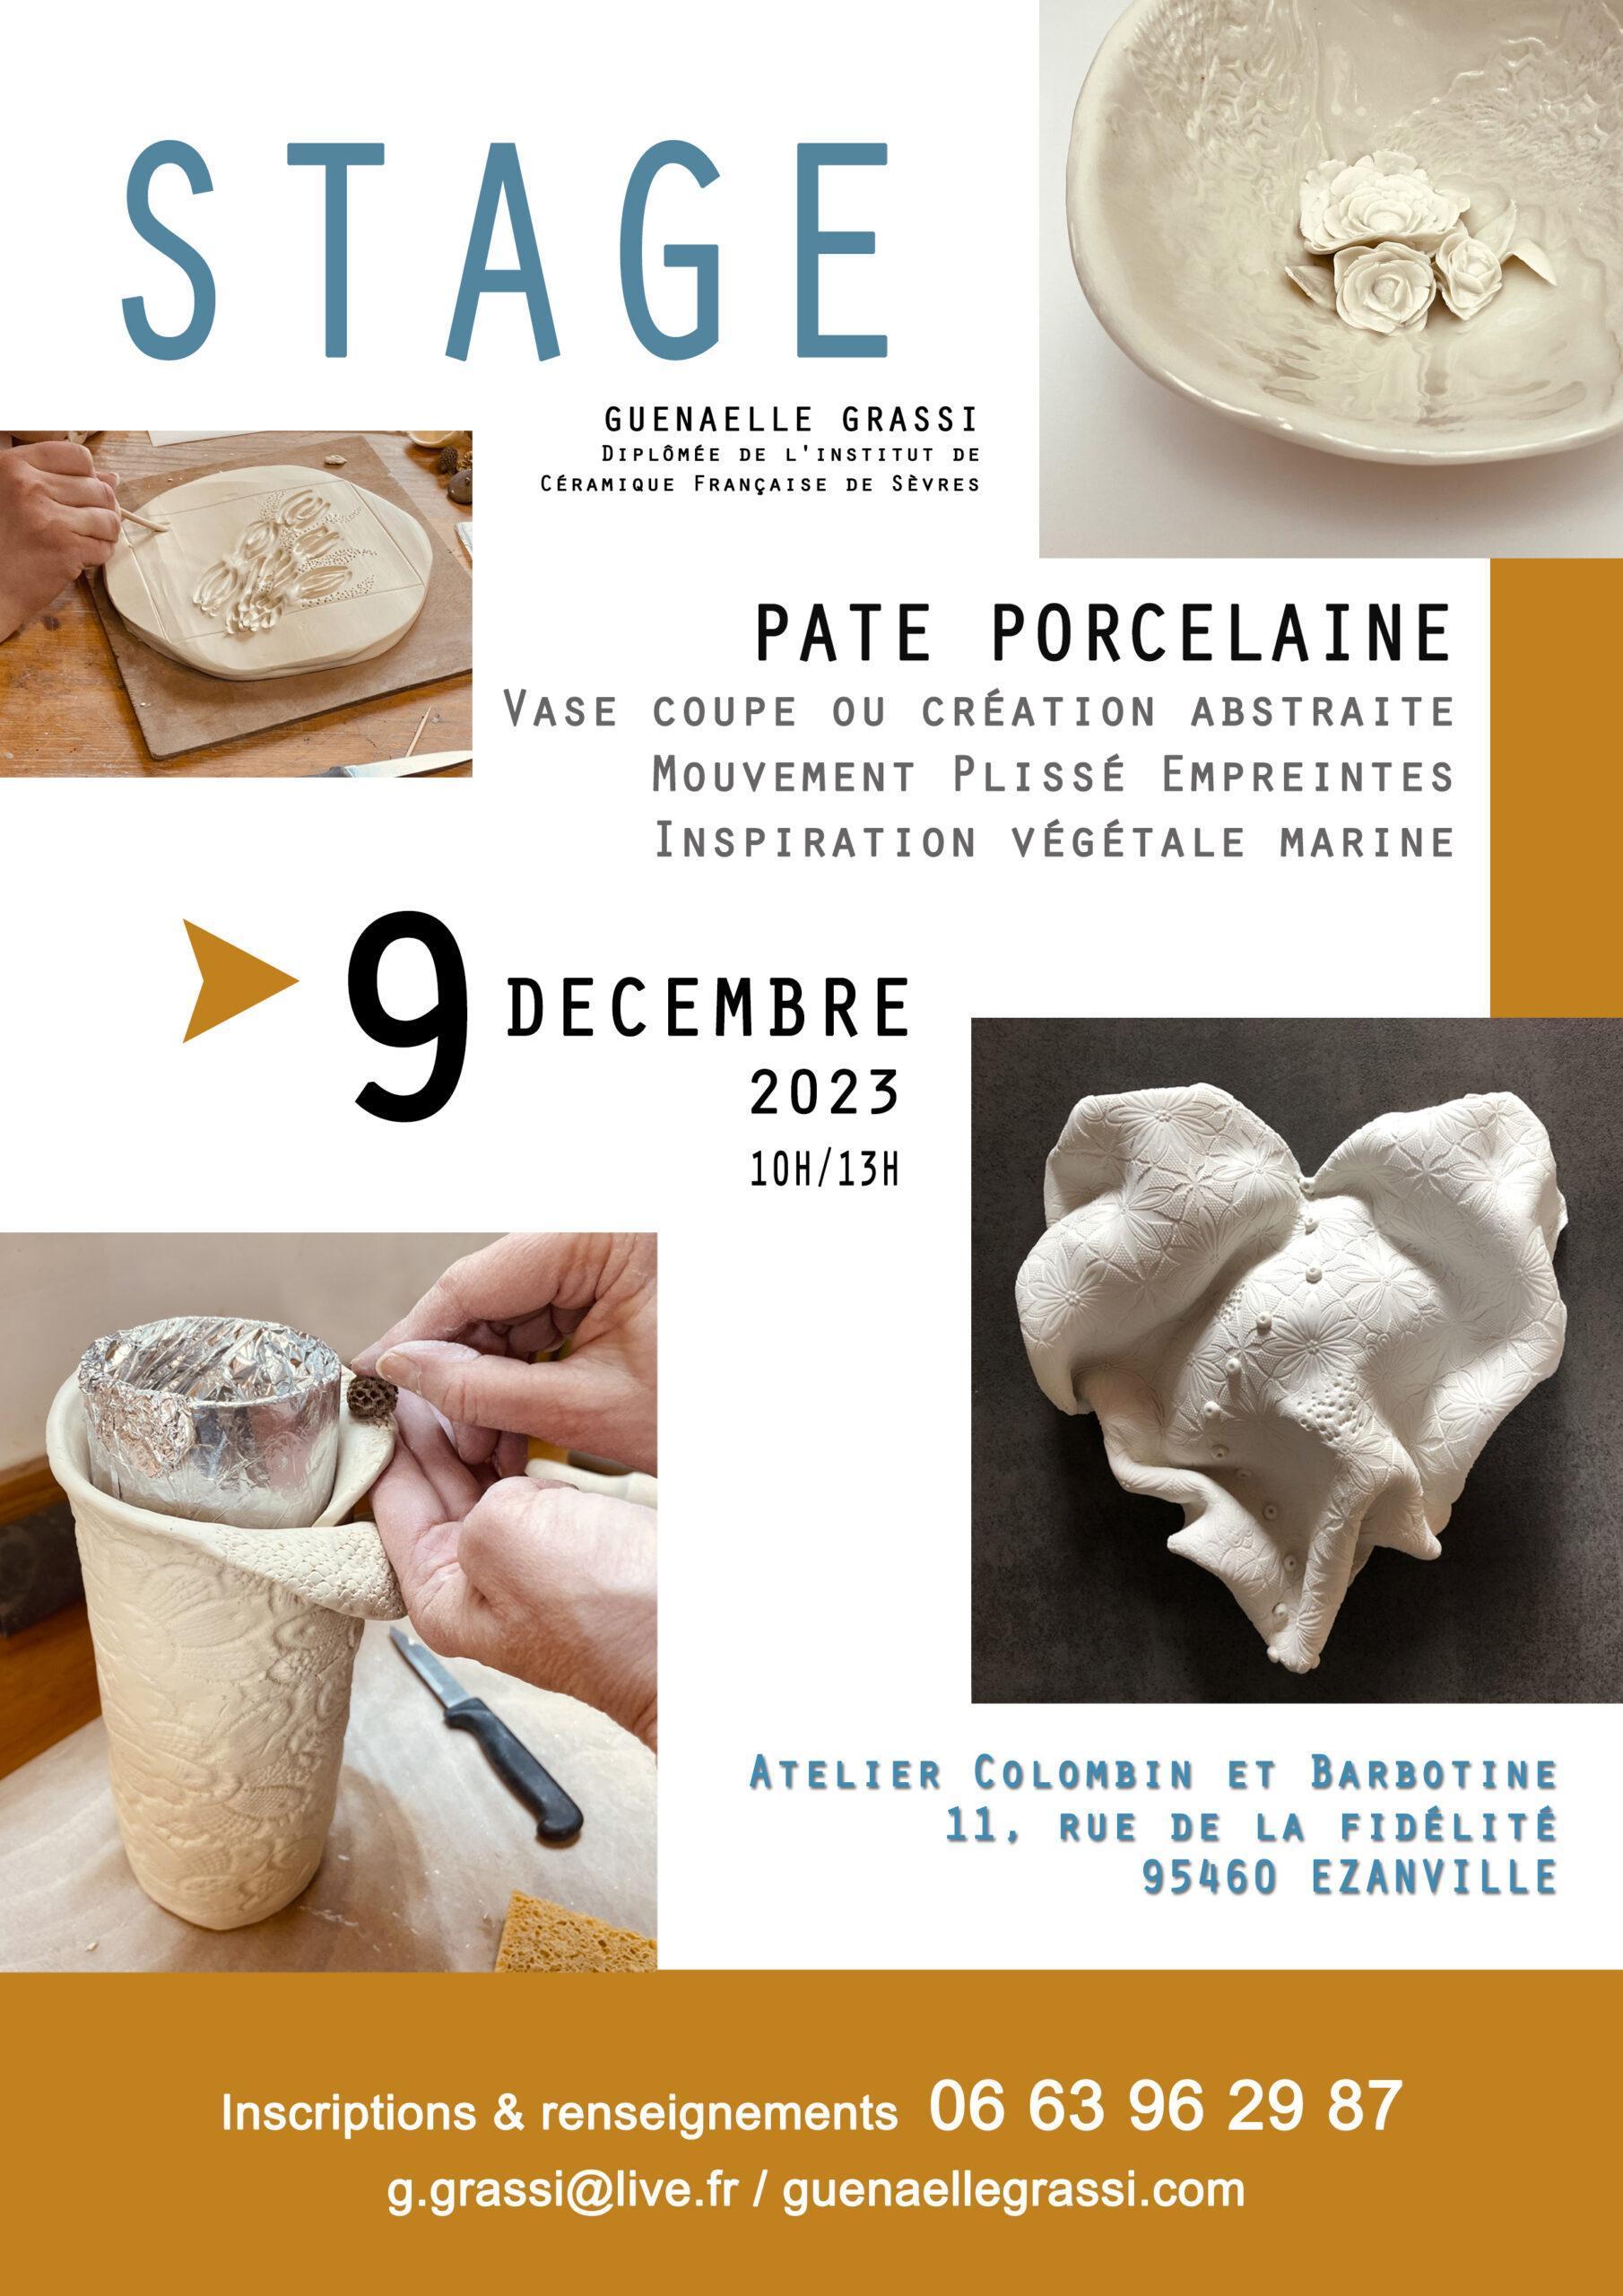 Stage Pate procelaine 9 Dec 2023